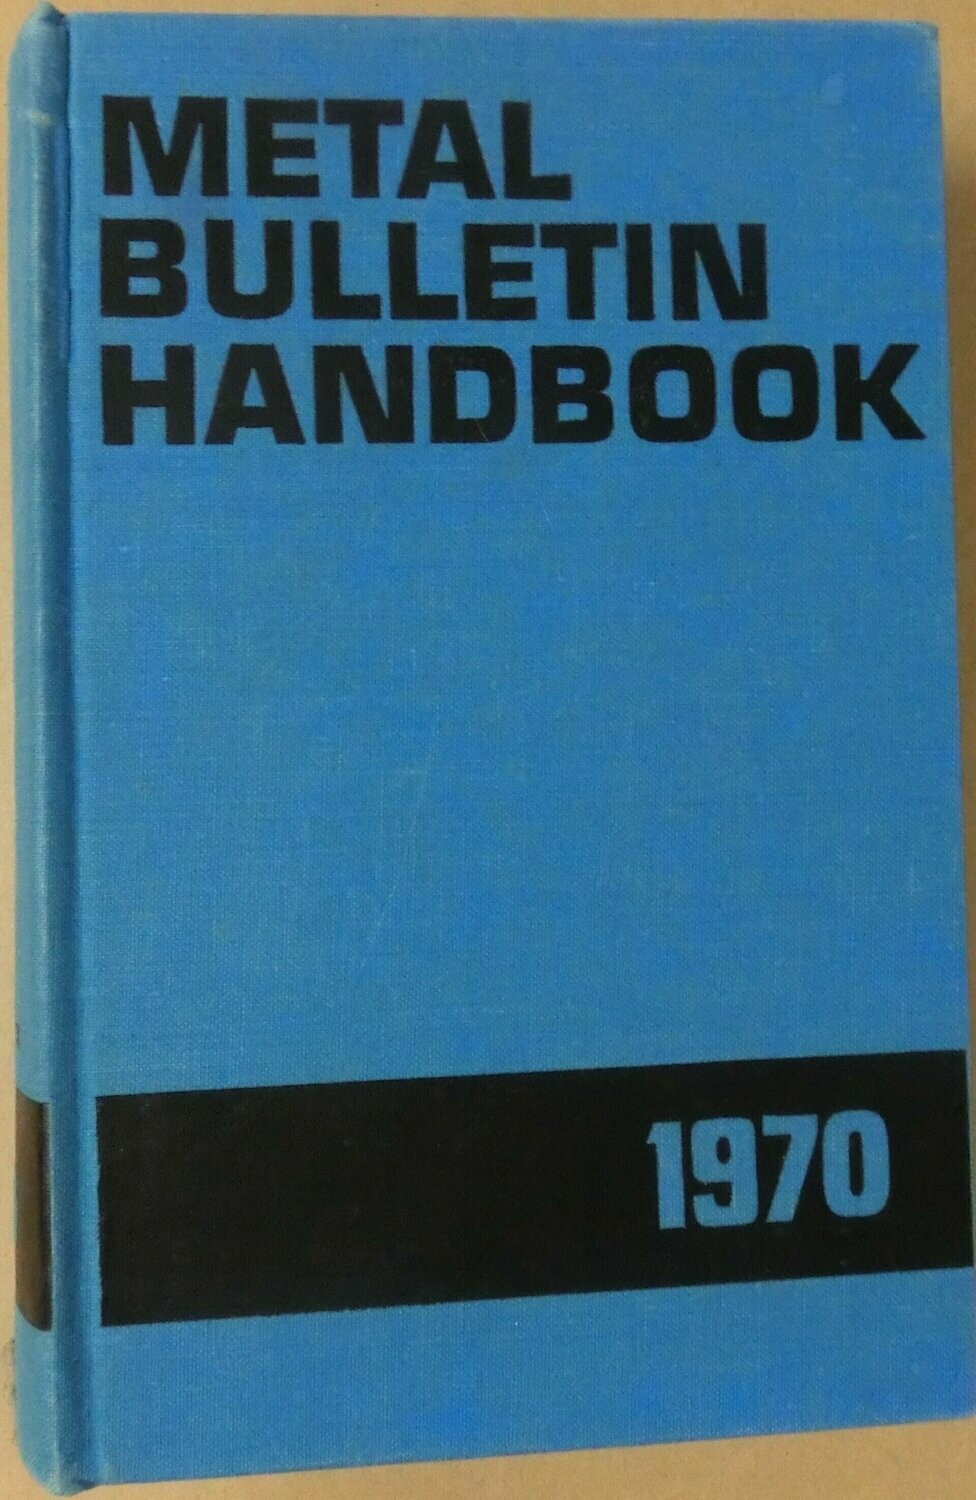 Metal Bulletin handbook 1970